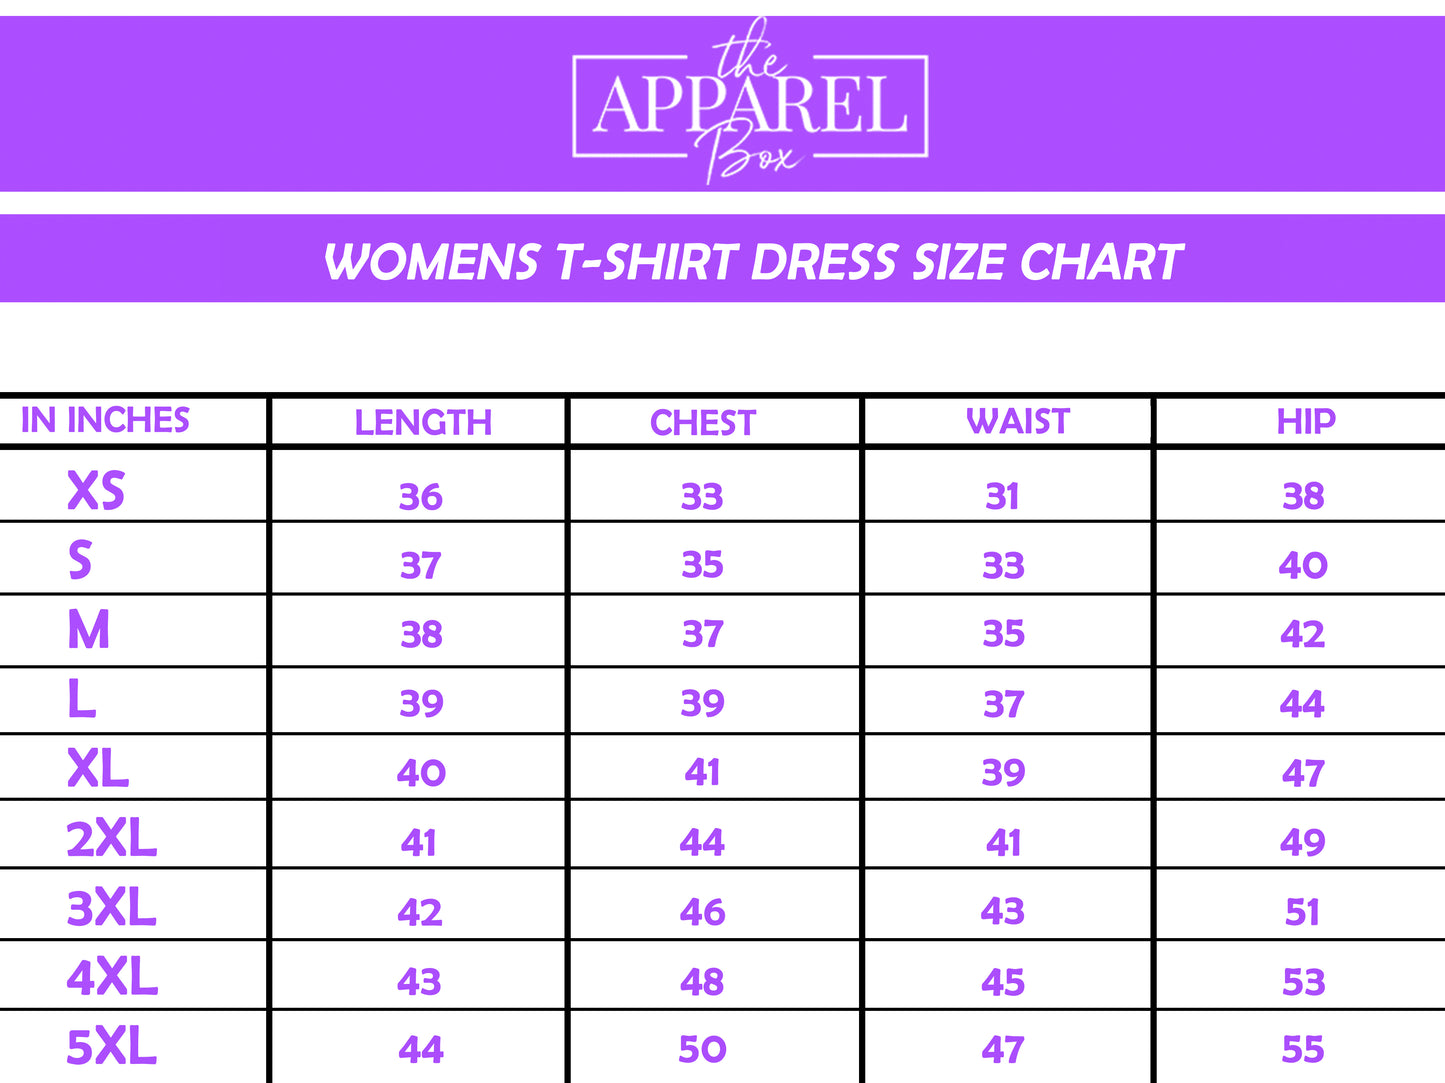 Short Sleeve Pocket T-shirt Dress#83